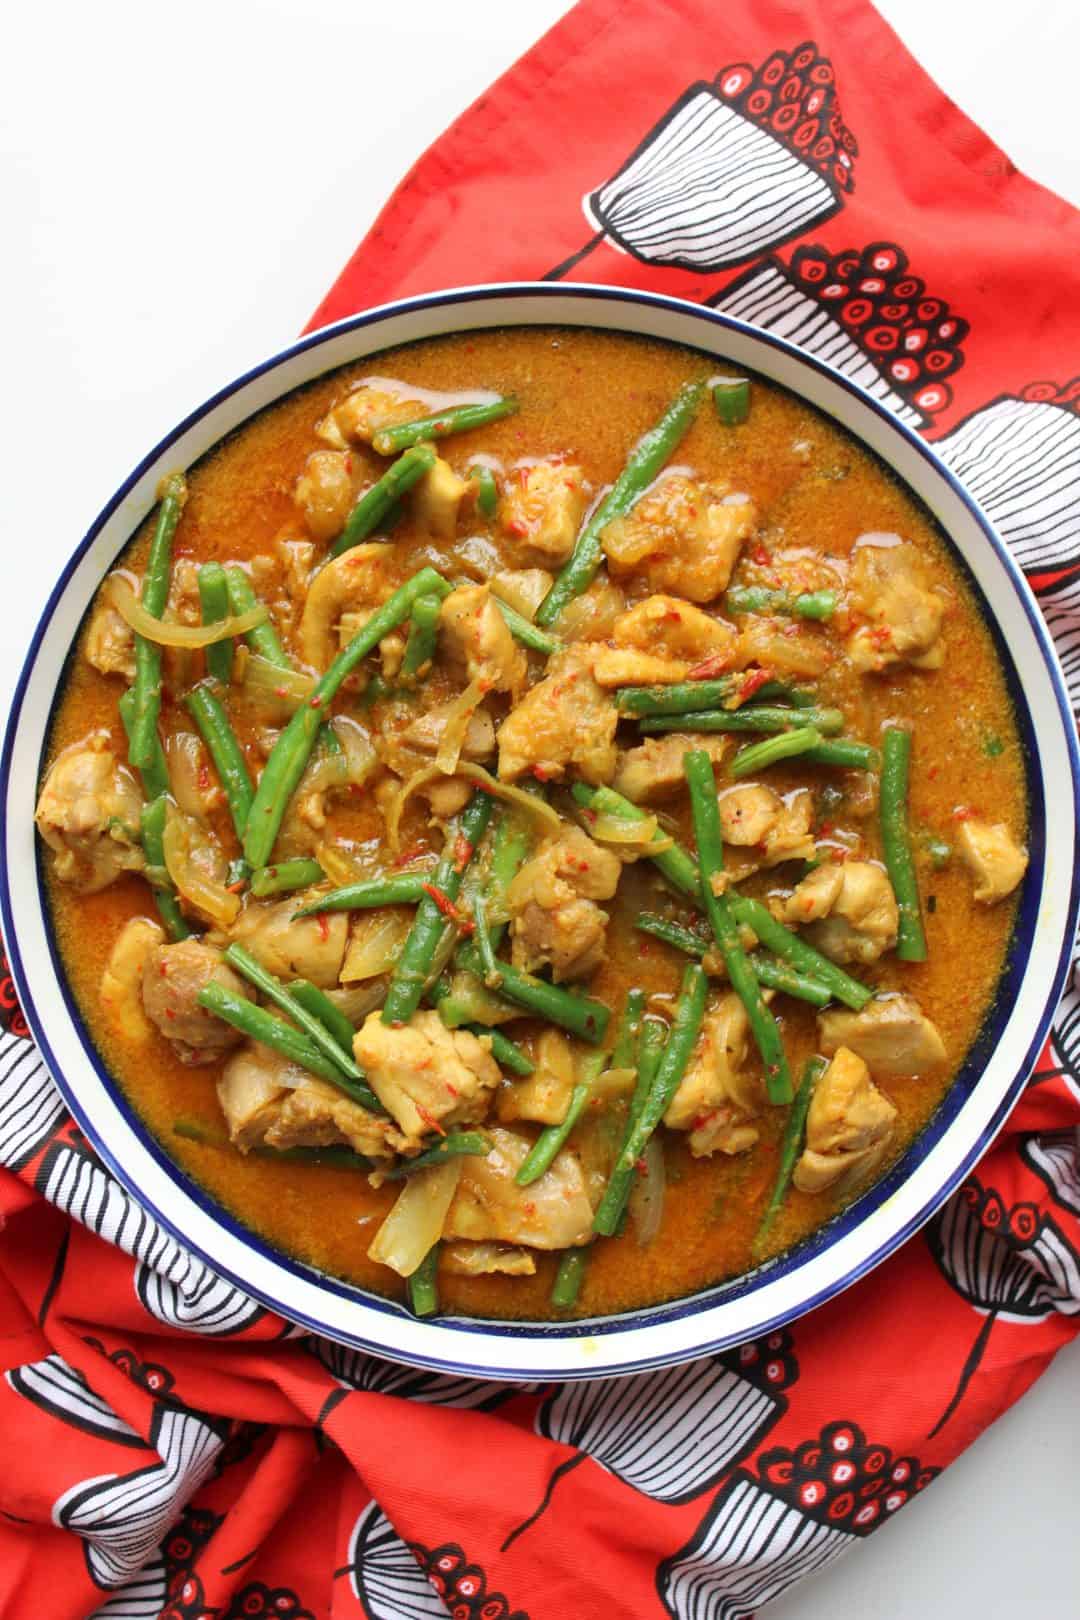 Gordon Ramsay's Malaysian Chicken, a beautiful sweet, hot and creamy curry dish